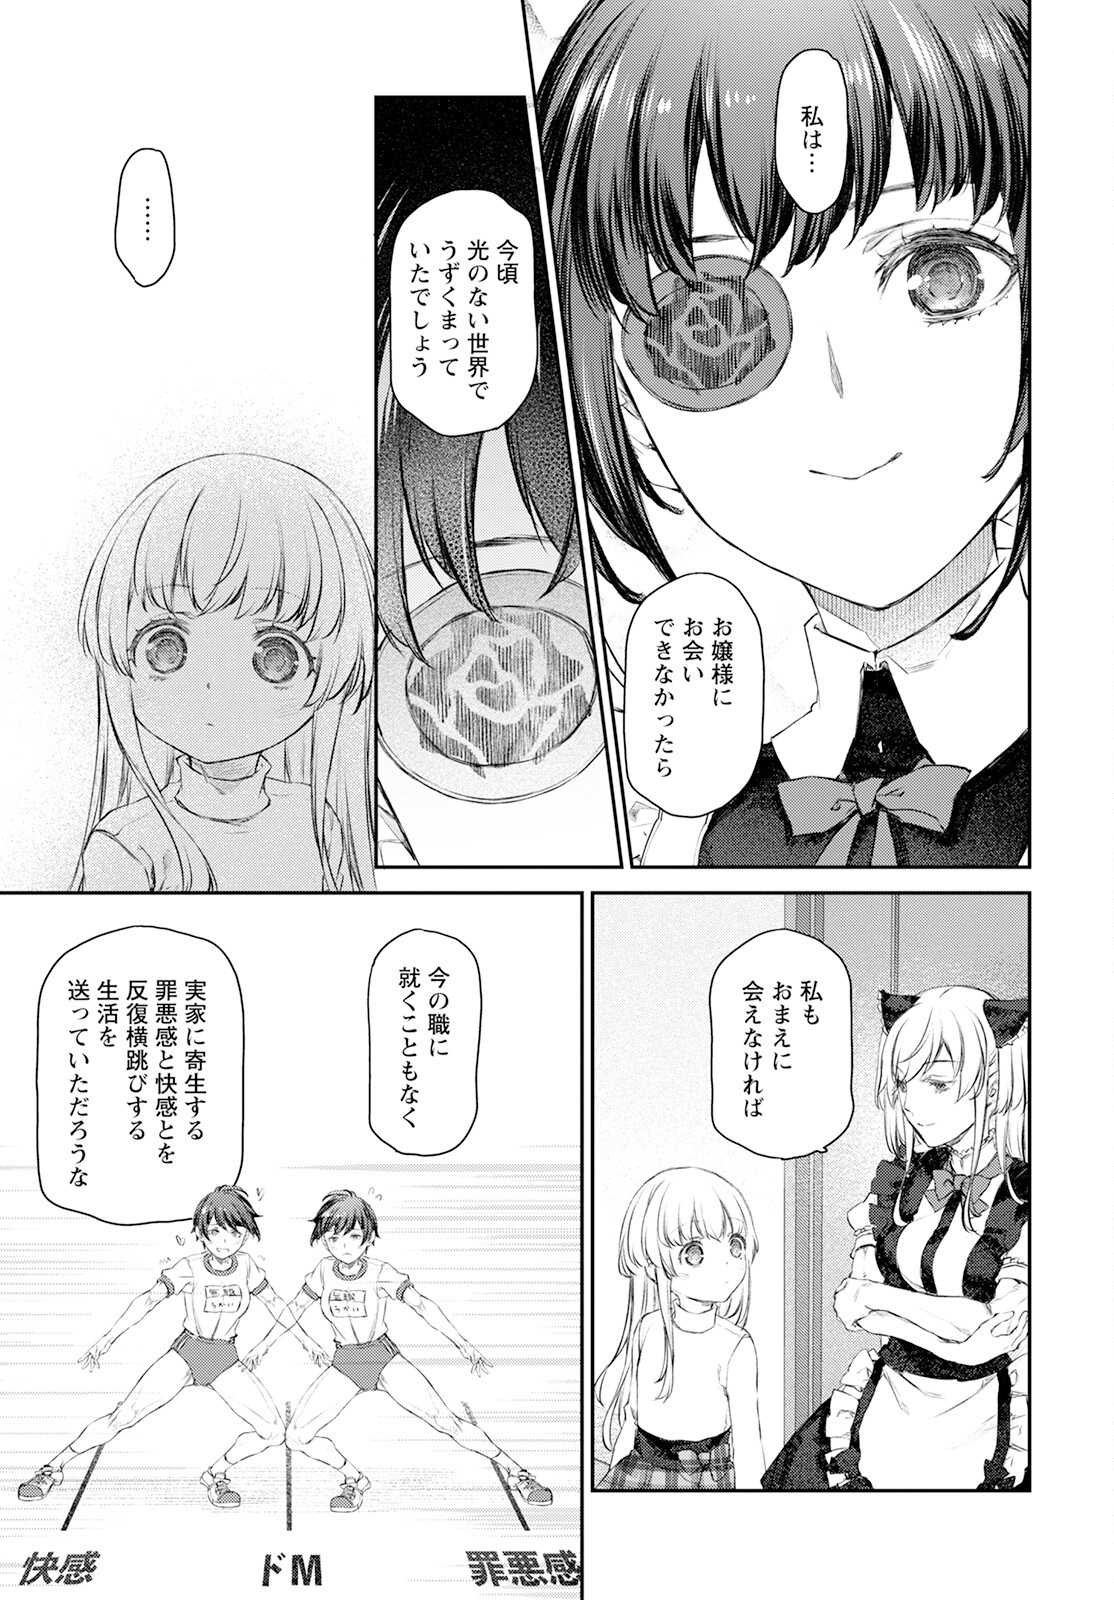 Uchi no Maid ga Uzasugiru! - Chapter 58 - Page 7